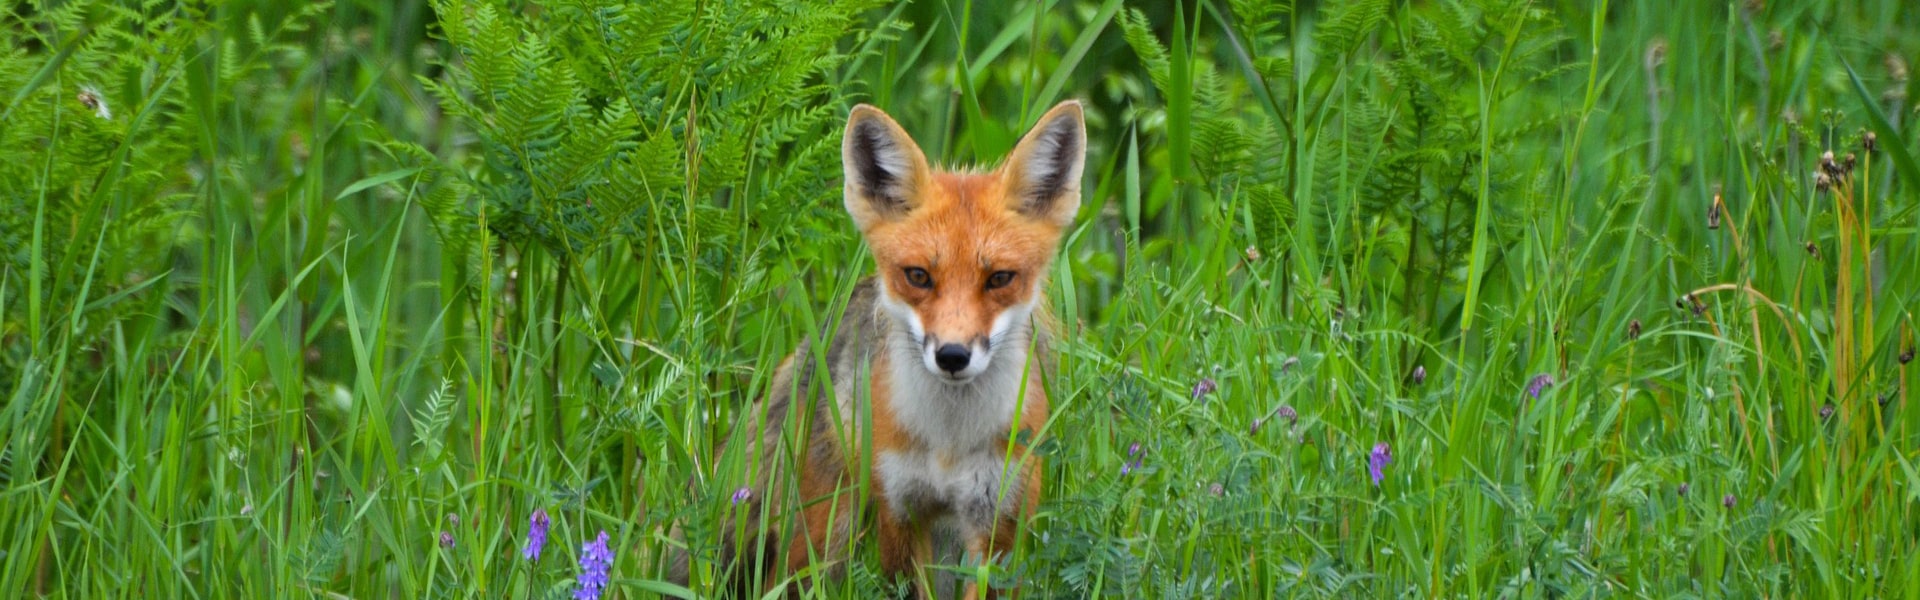 A fox looking through long grass